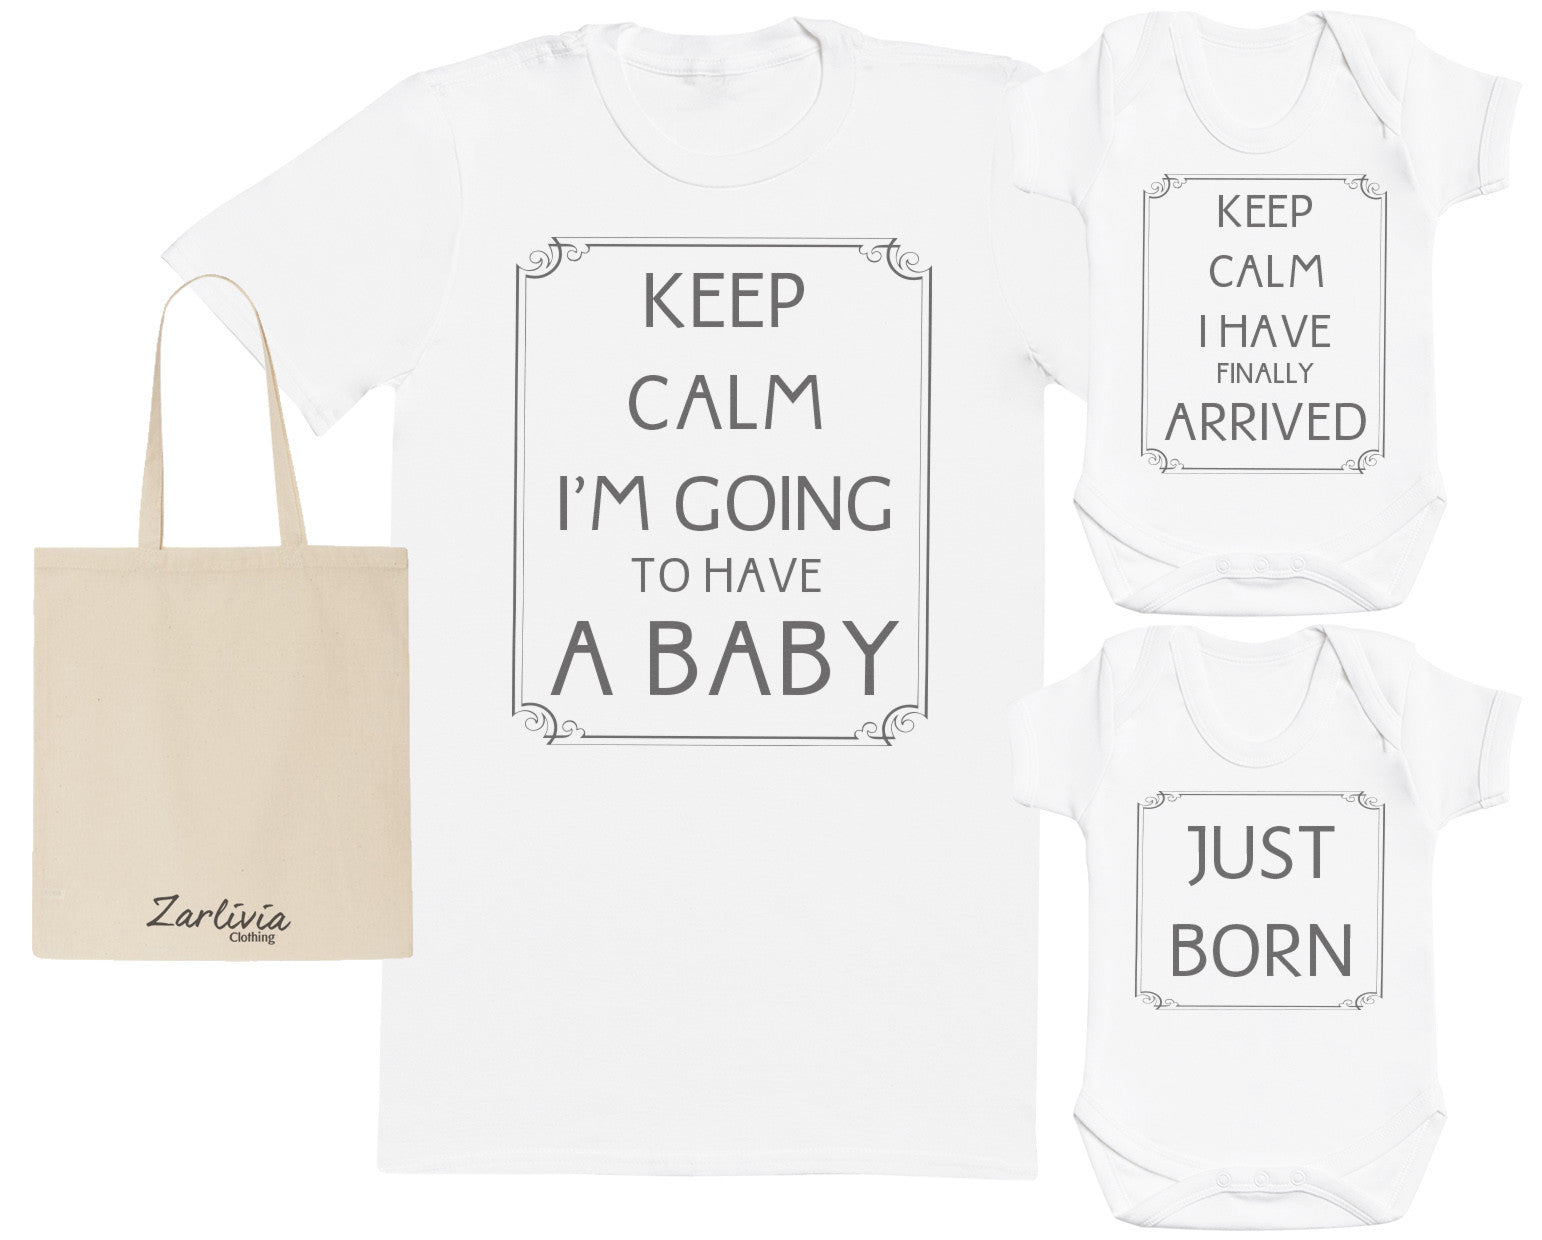 Keep Calm, Having A Baby Maternity Hospital Gift Set Bag with Hospital T-Shirt & New Baby Bodysuit